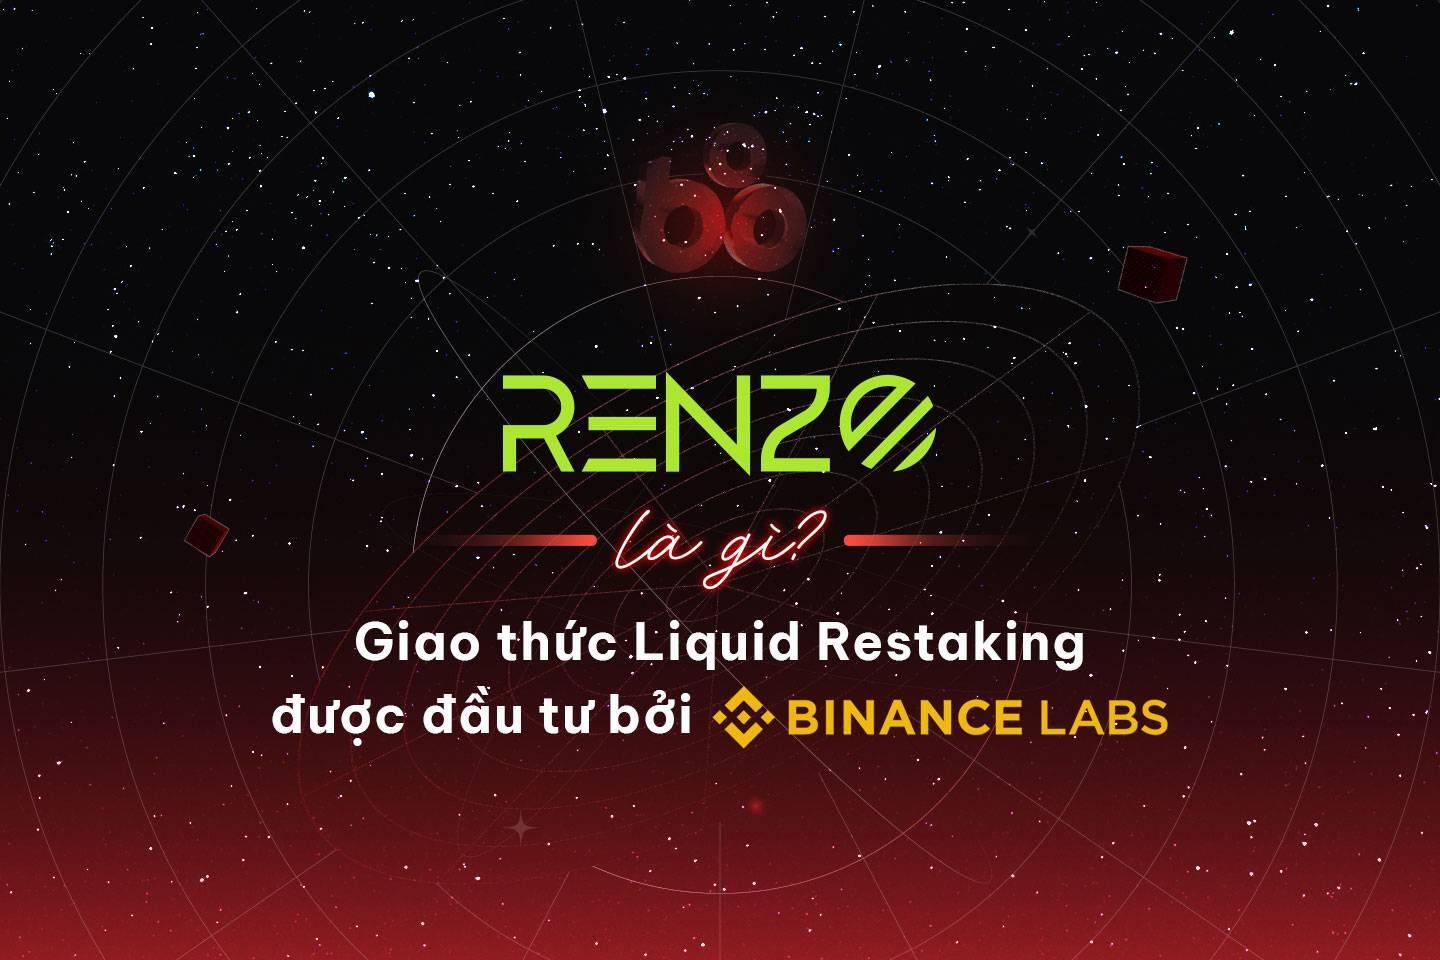 renzo-la-gi-giao-thuc-liquid-restaking-duoc-dau-tu-boi-binance-labs